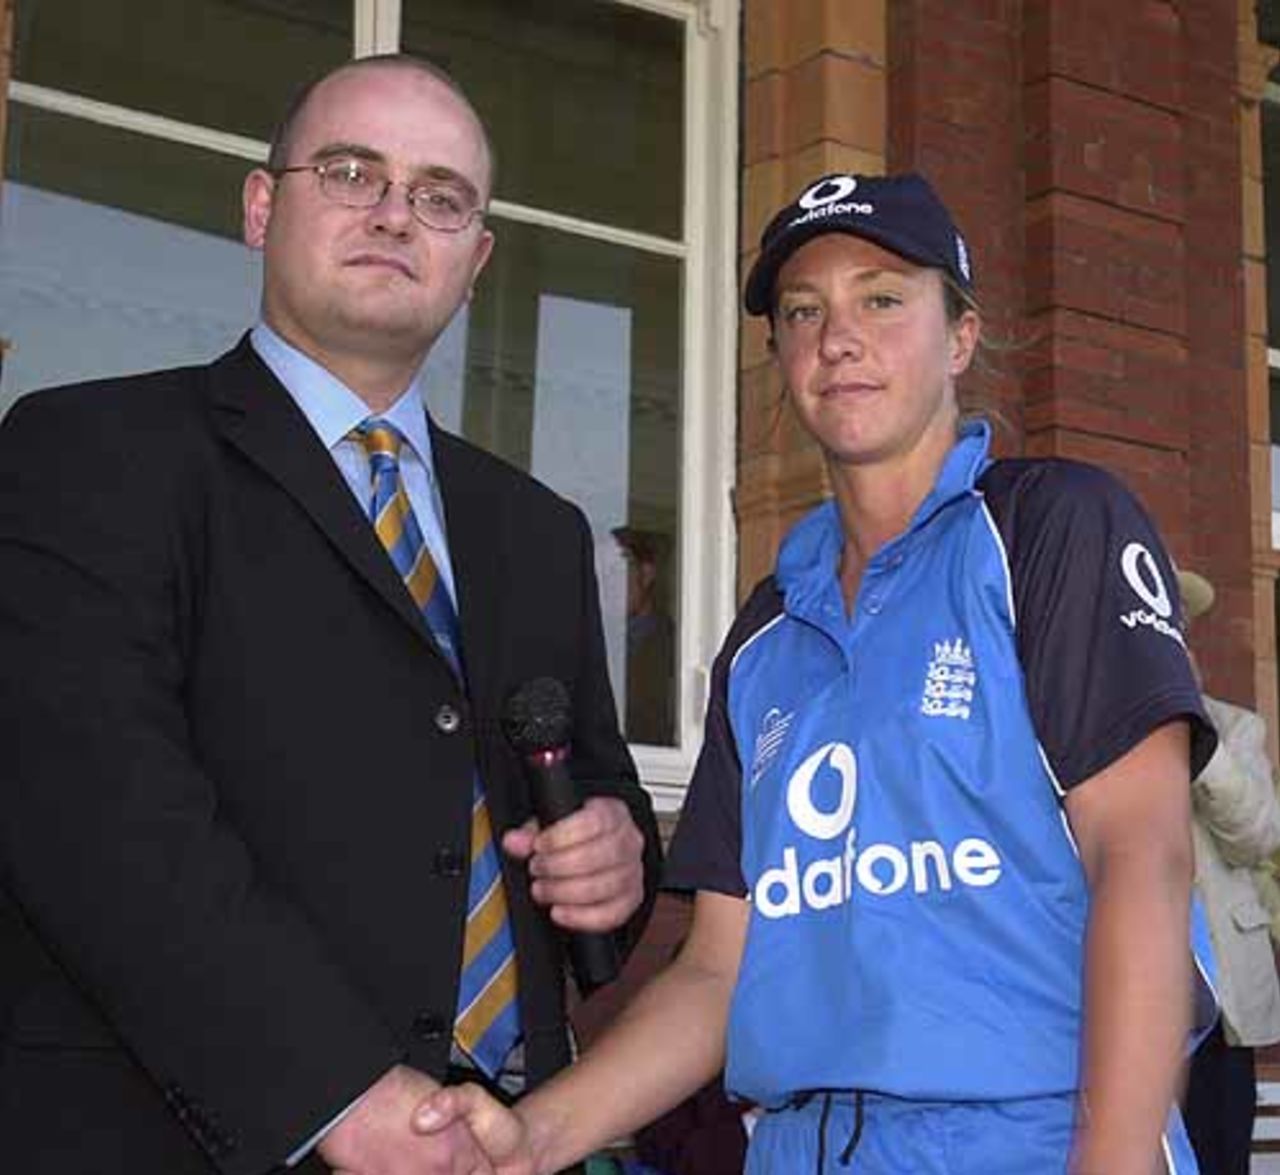 England Women v Australia Women, 3rd ODI , Lord's 3 July 2001